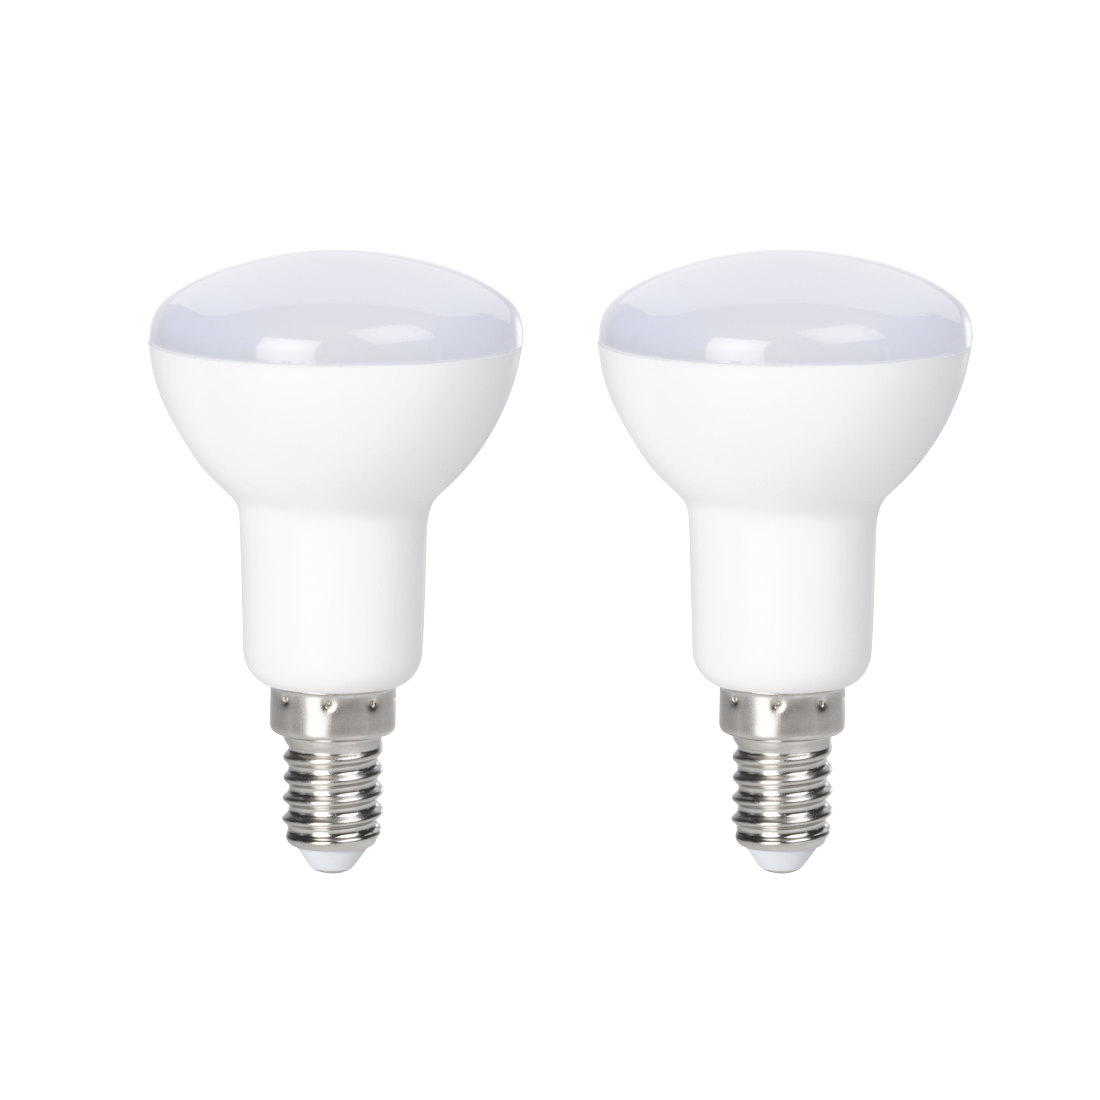 abx High-Res Image - Xavax, LED Bulb, E14, 450 lm Replaces 39 W, Reflector Bulb R50, warm white, 2 pcs